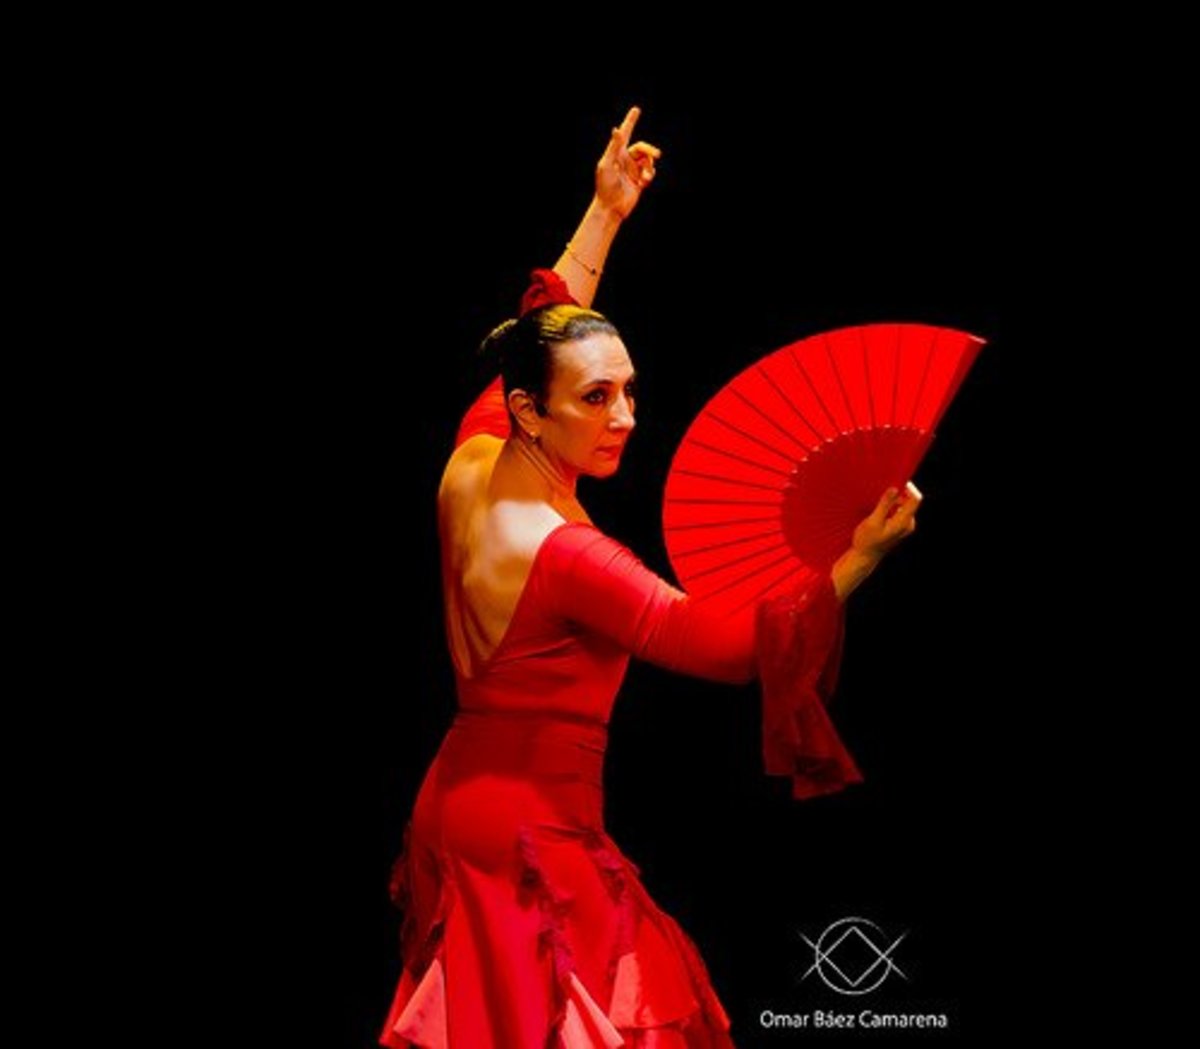 historical traditional flamenco dress